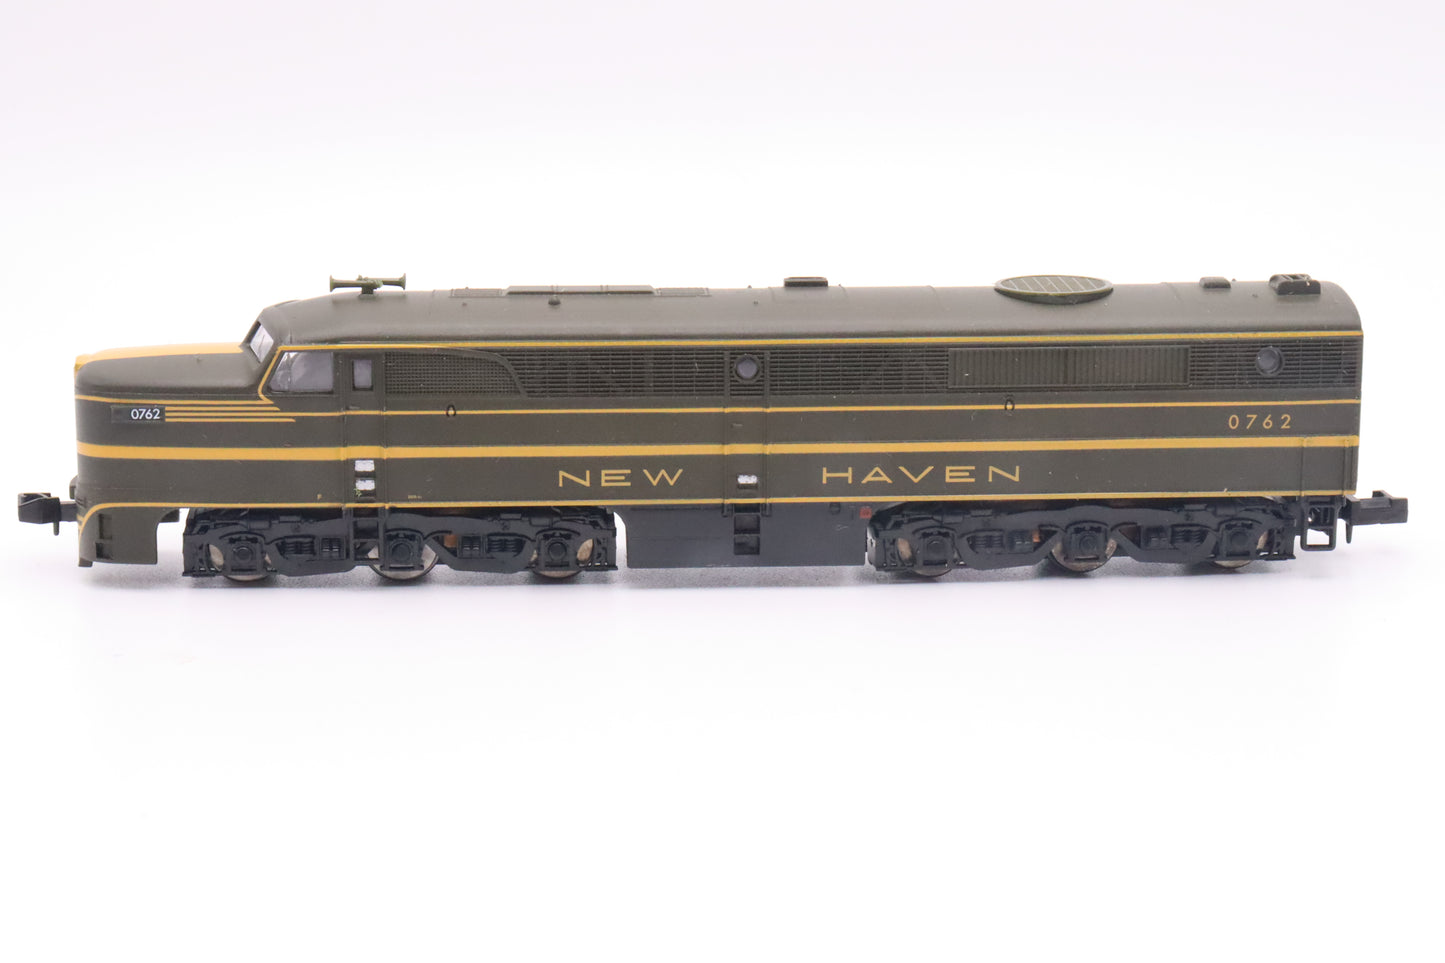 LL-7055 - Alco PA Locomotive - New Haven - DH-0762